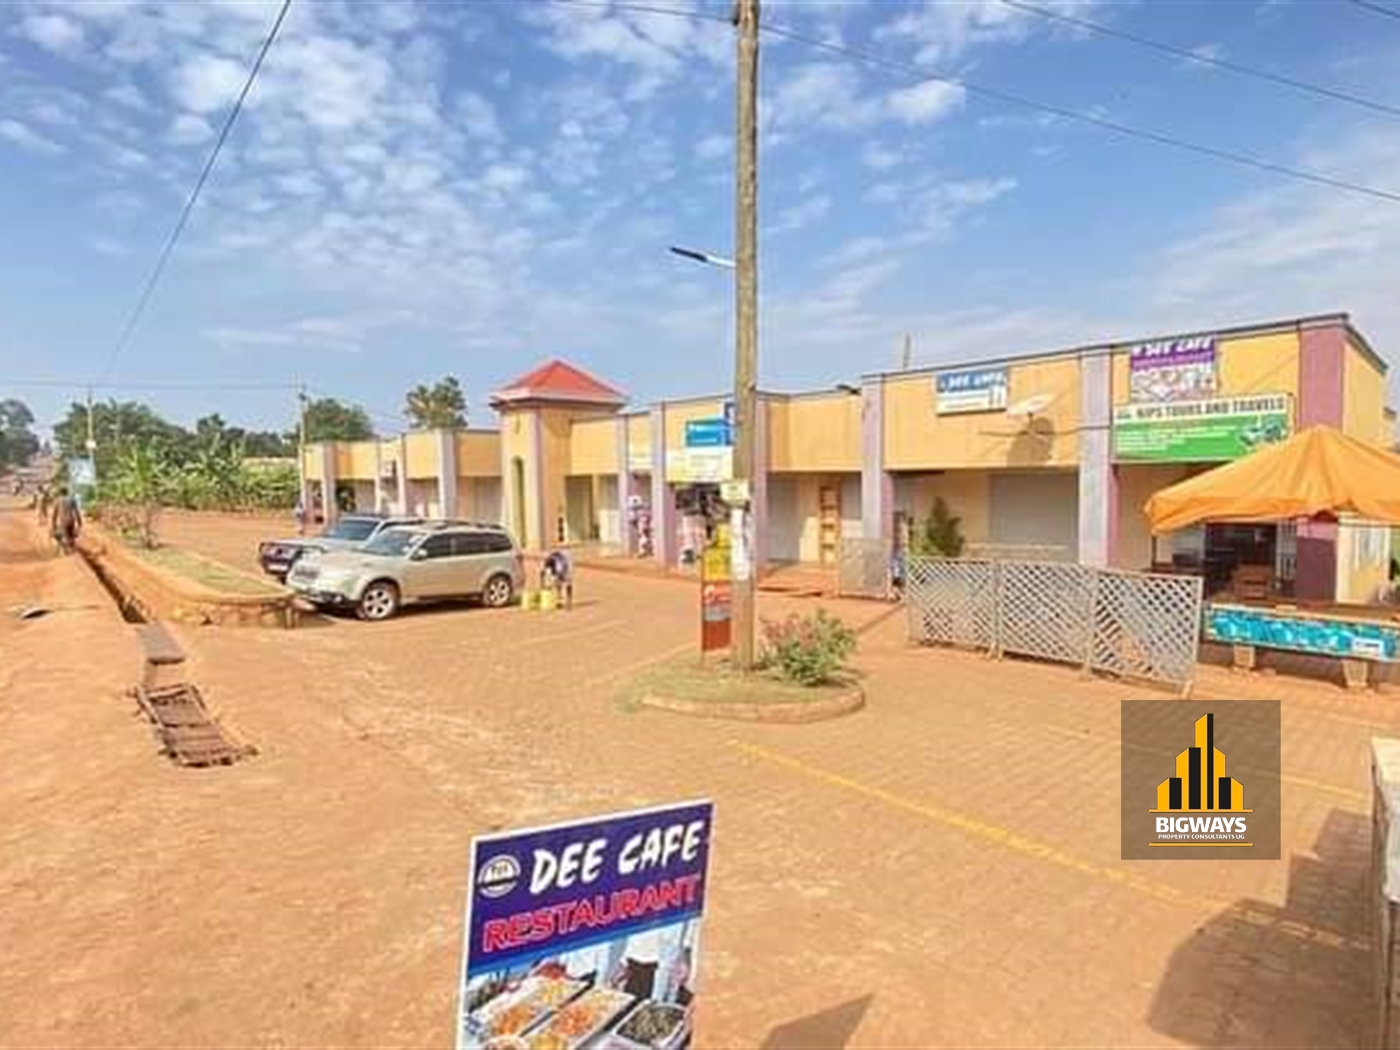 Commercial block for sale in Seeta Mukono